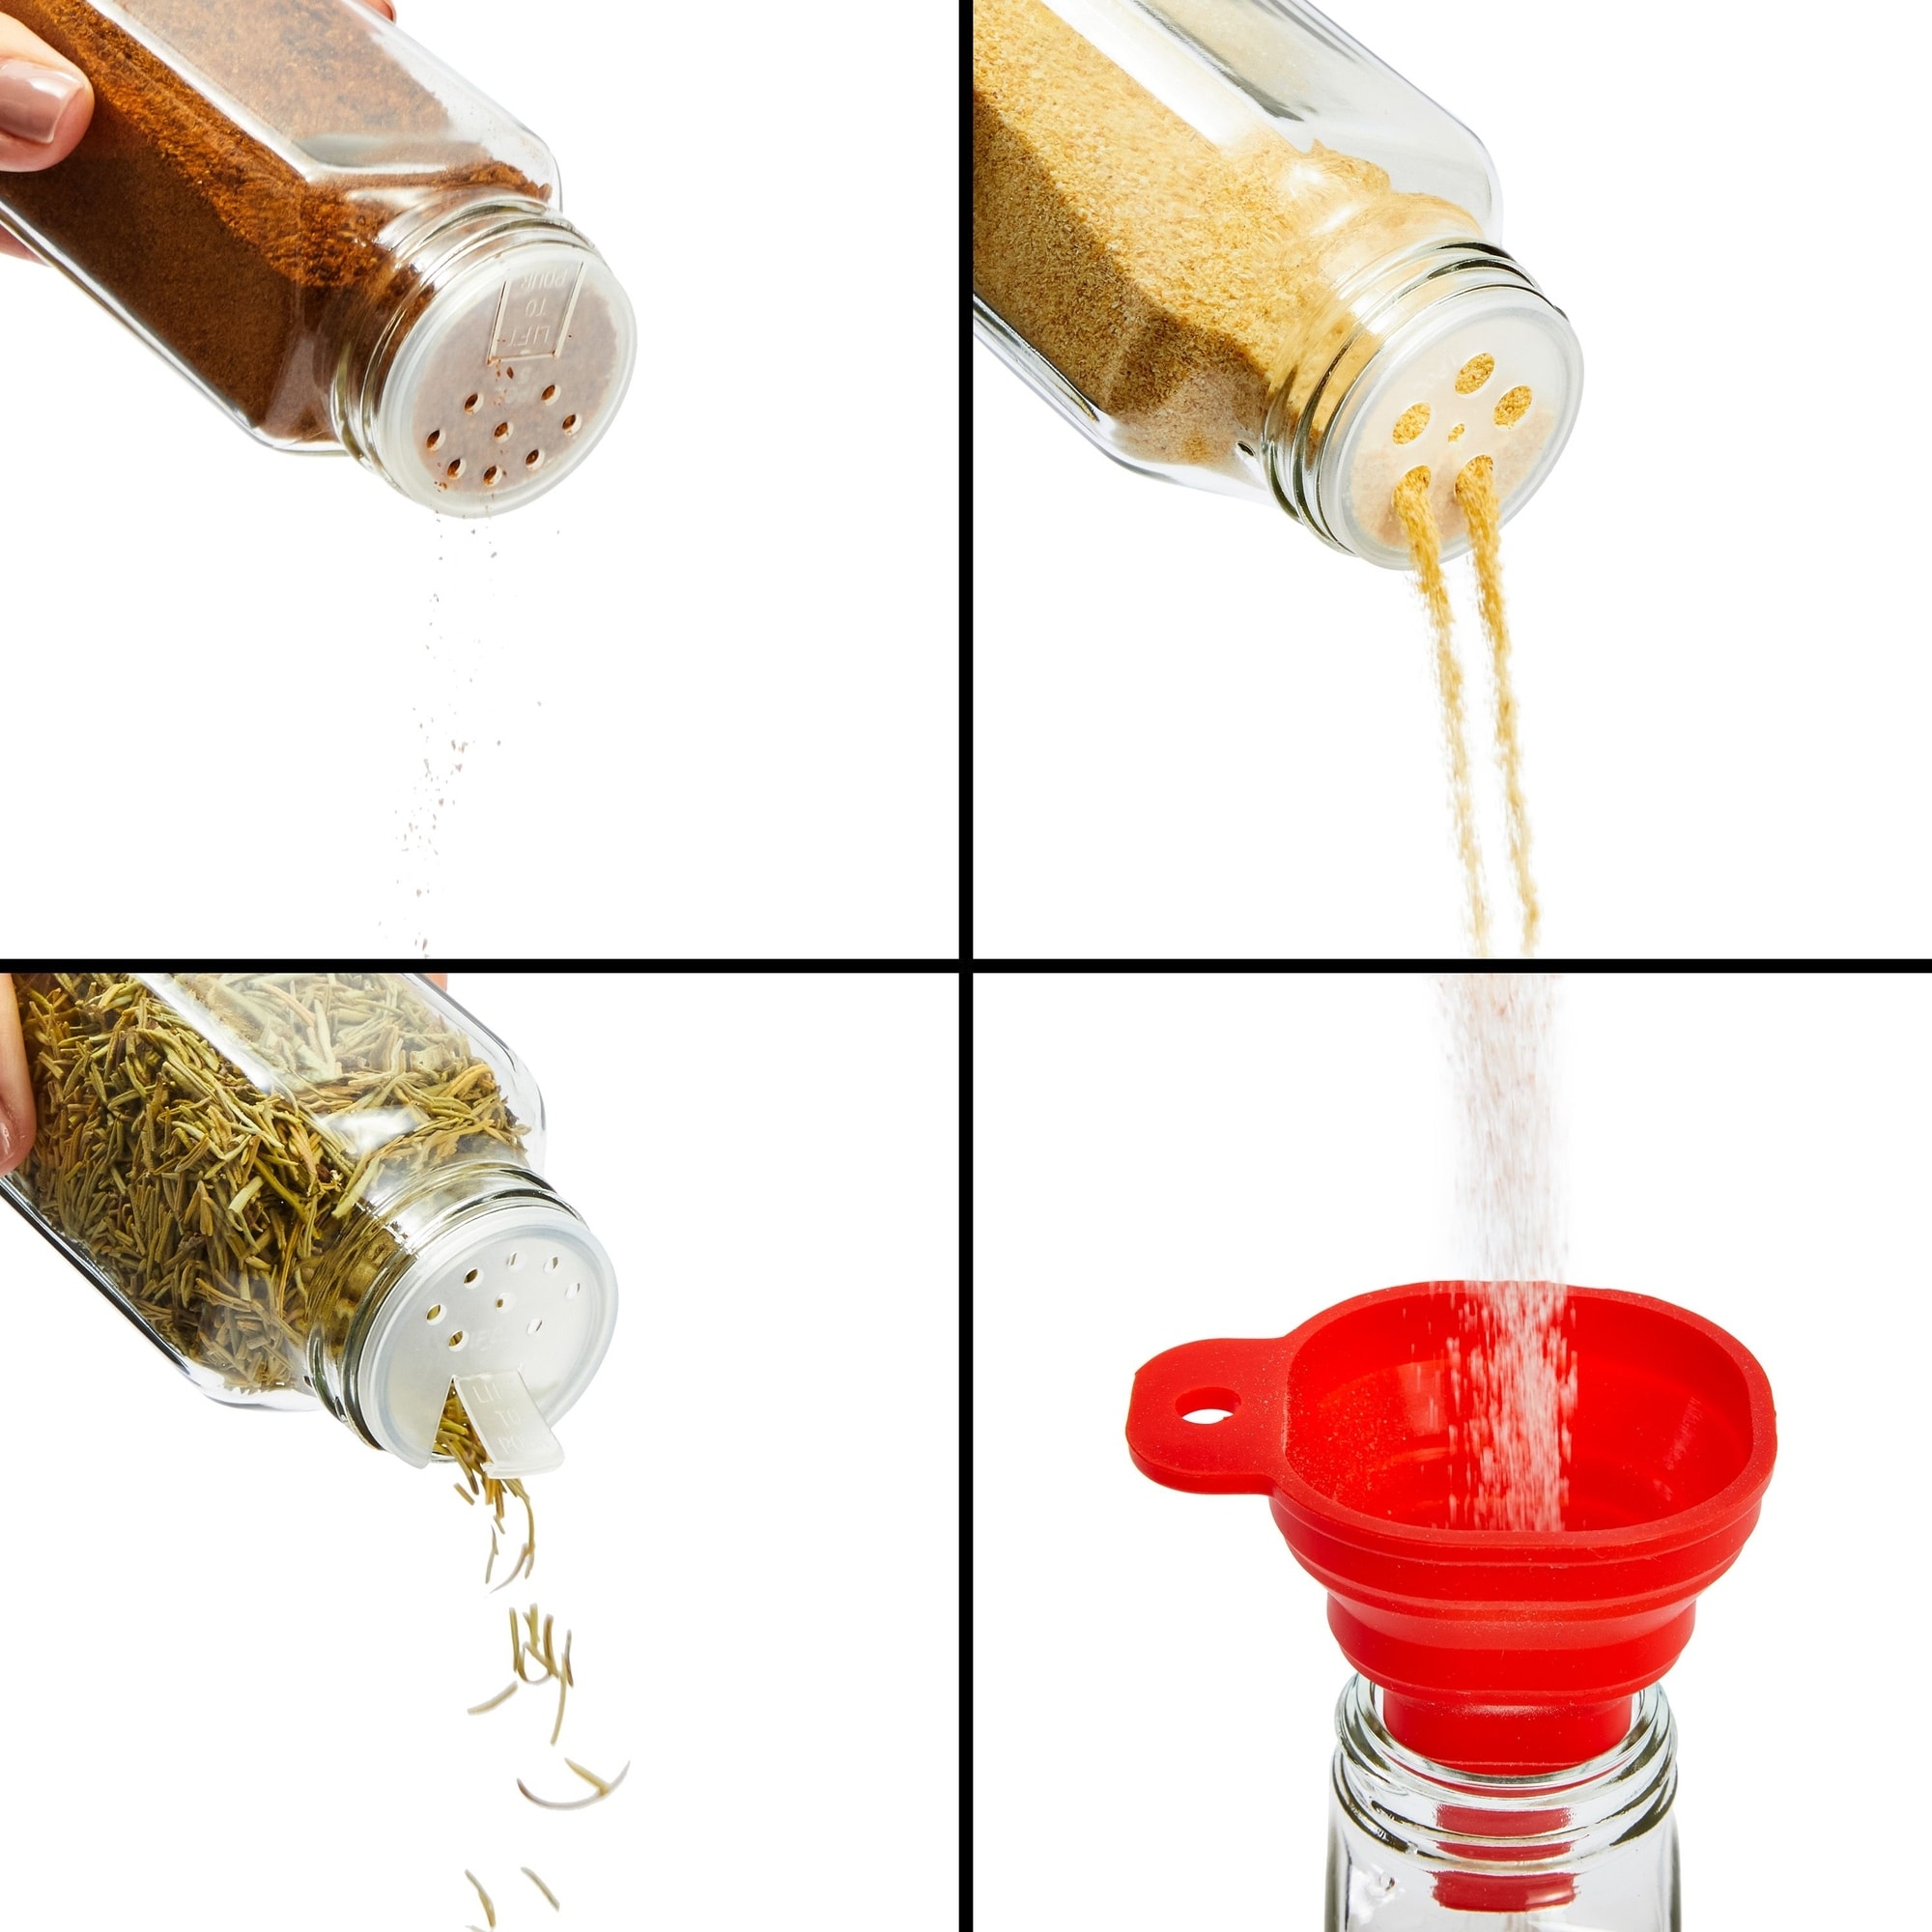 https://ak1.ostkcdn.com/images/products/is/images/direct/7beca8e5c13e3a8c50e81cdac22a26170521a995/24-Pack-Empty-4oz-Glass-Spice-Bottles%2C-284-Seasoning-Labels%2C-Lids%2C-Gold-Caps.jpg